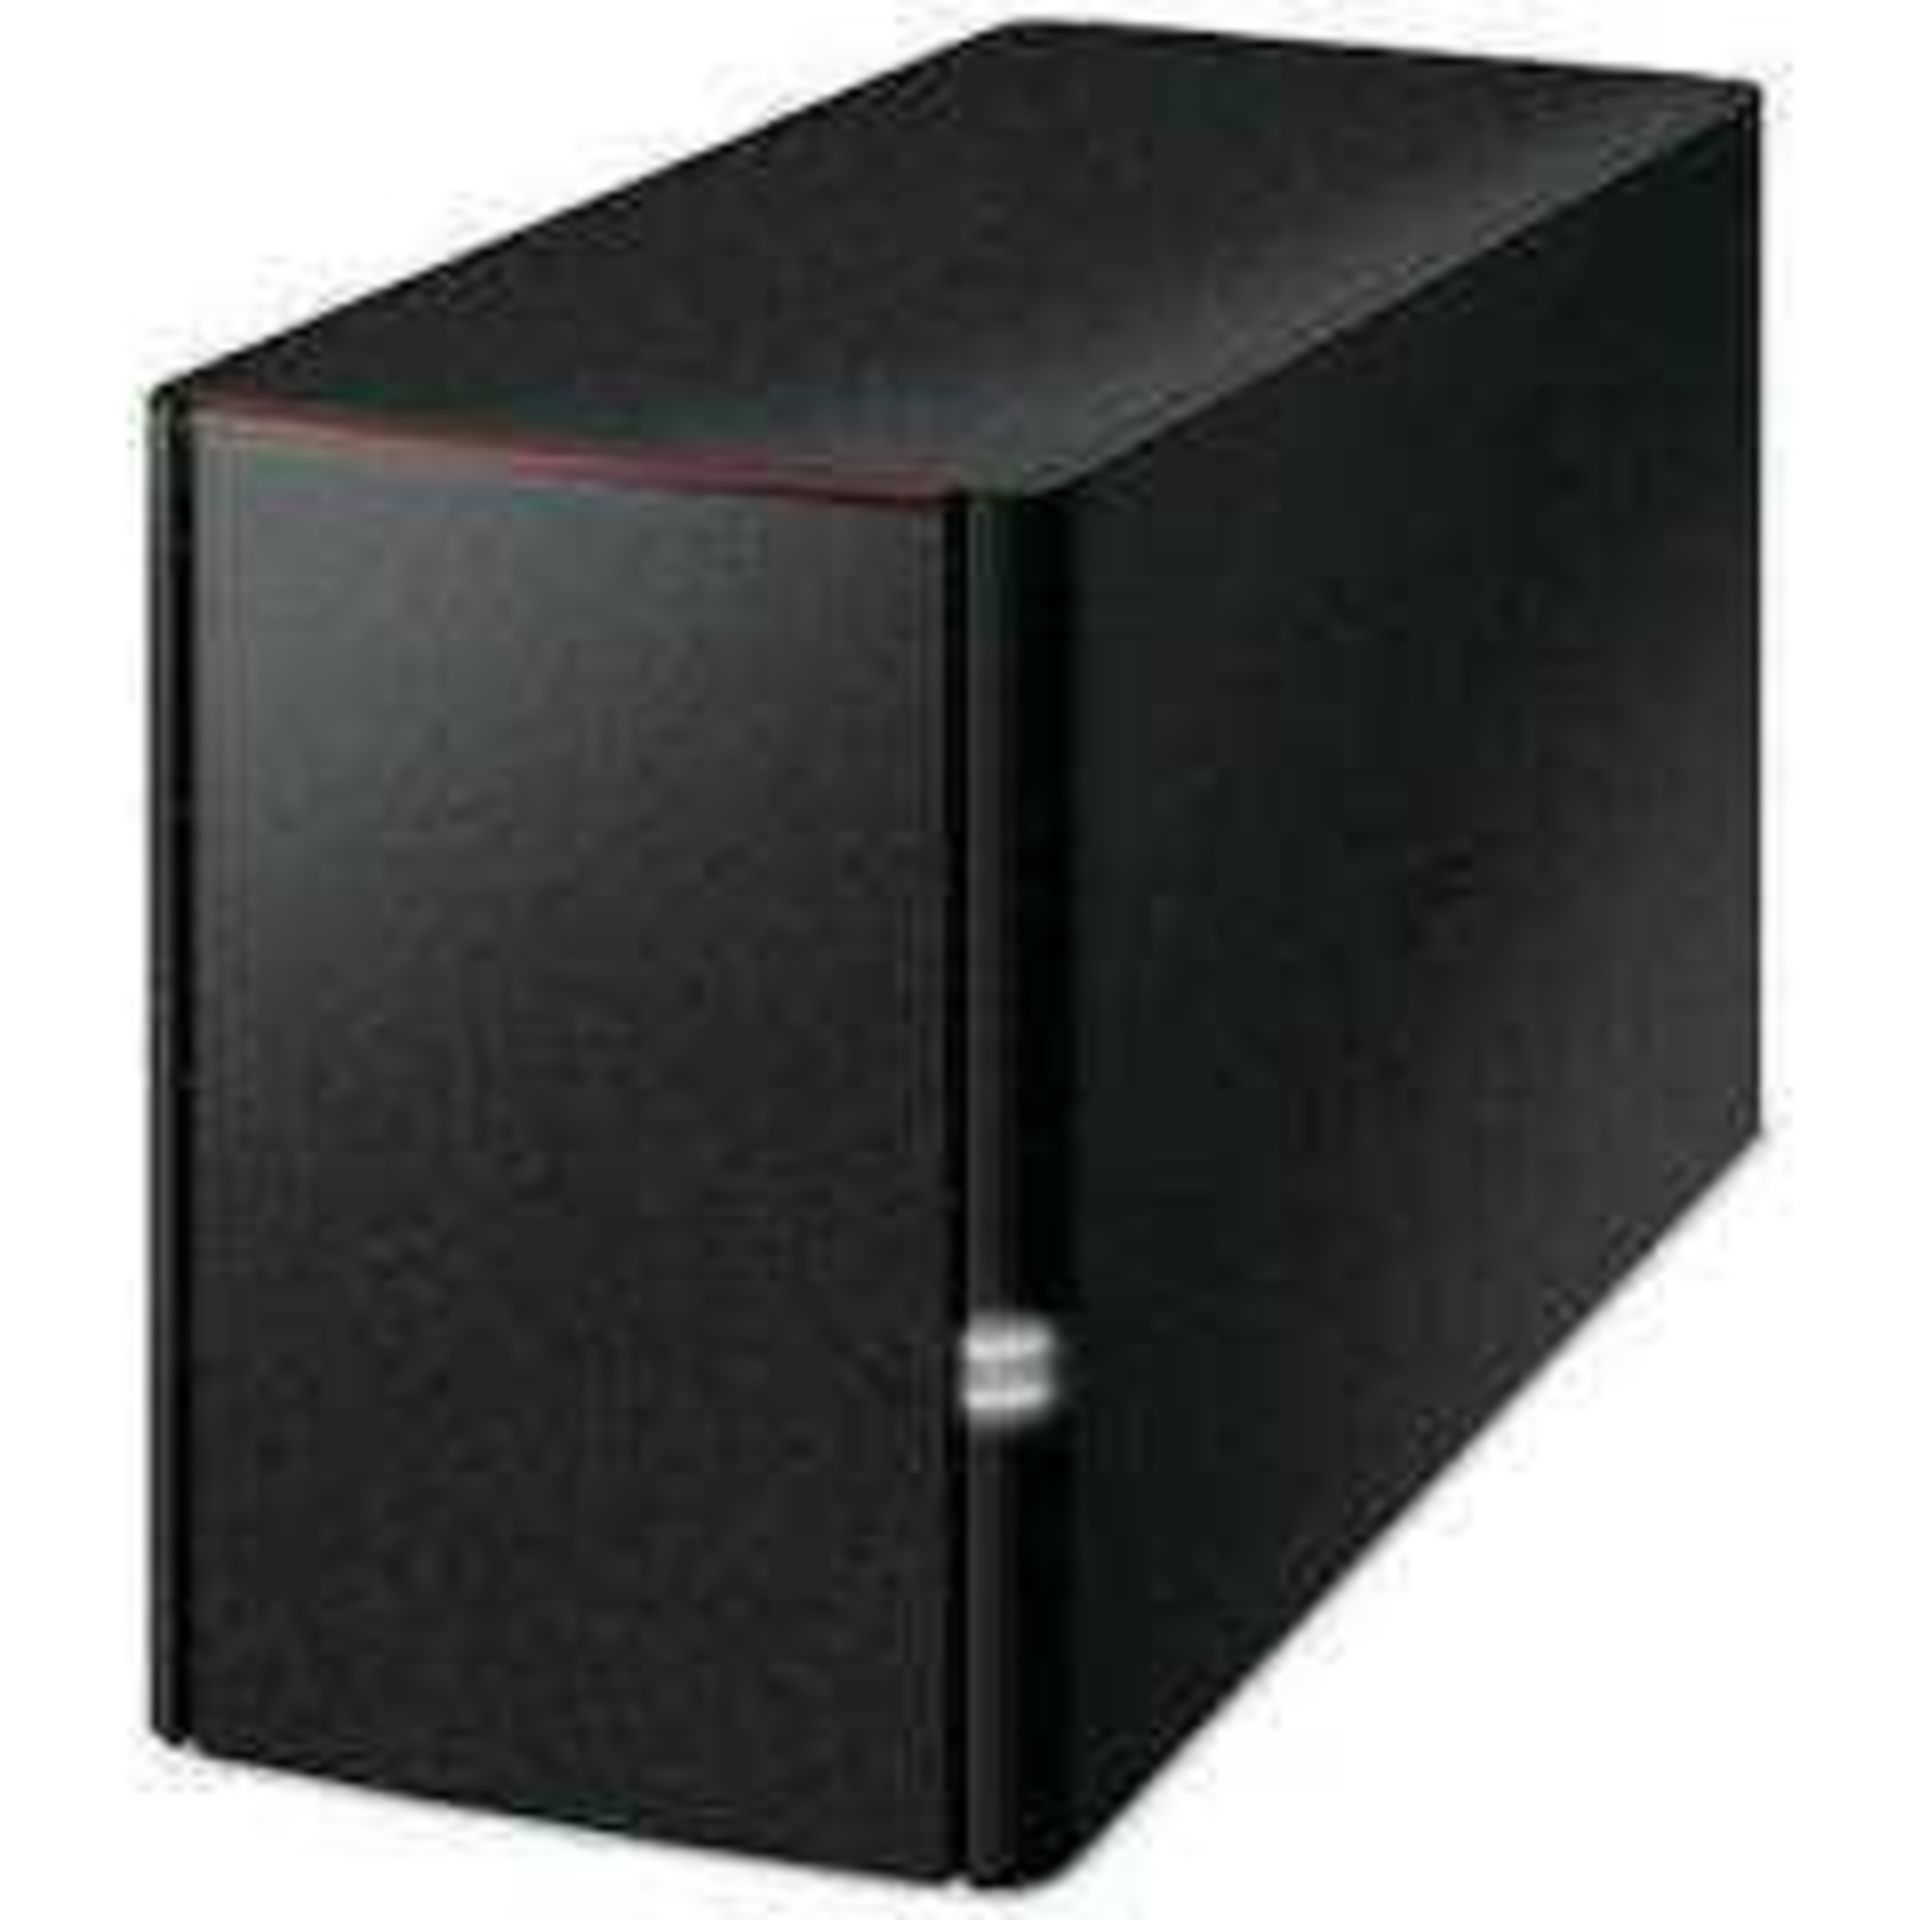 RRP £250 Boxed Buffalo High Performance Network Storage Linkstation 520